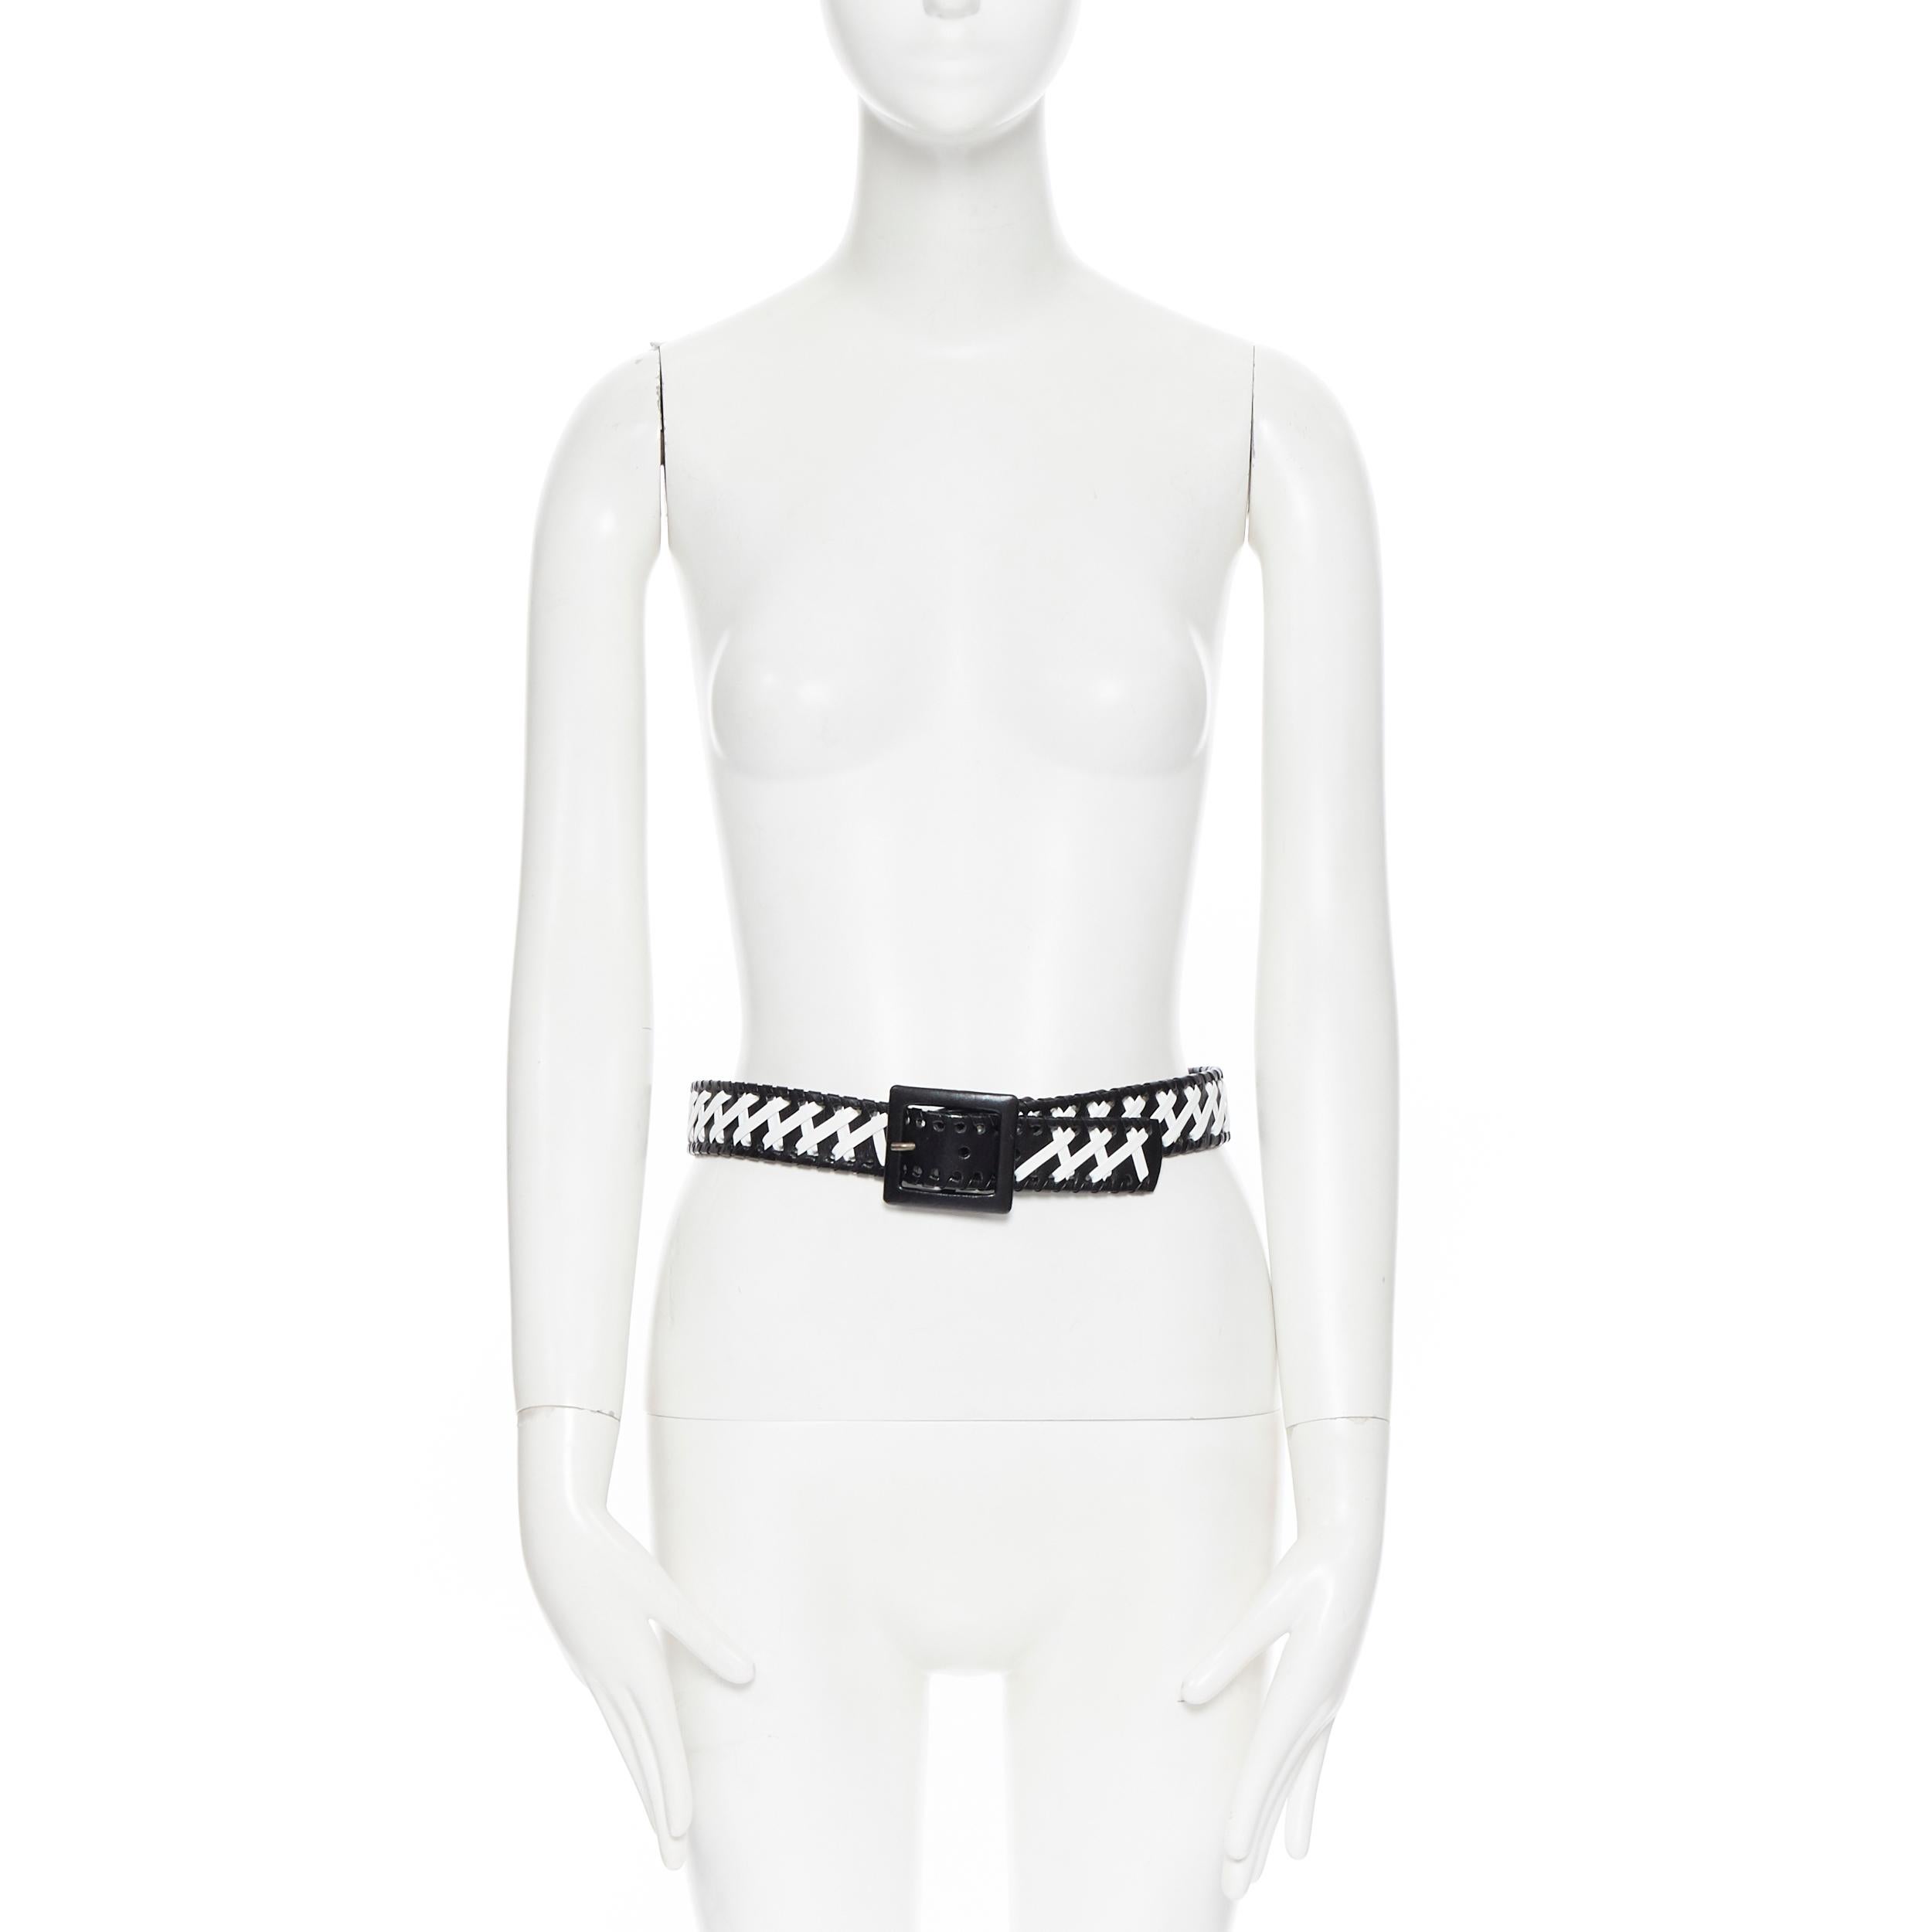 OSCAR DE LA RENTA black white whipstitch leather buckle belt S 28